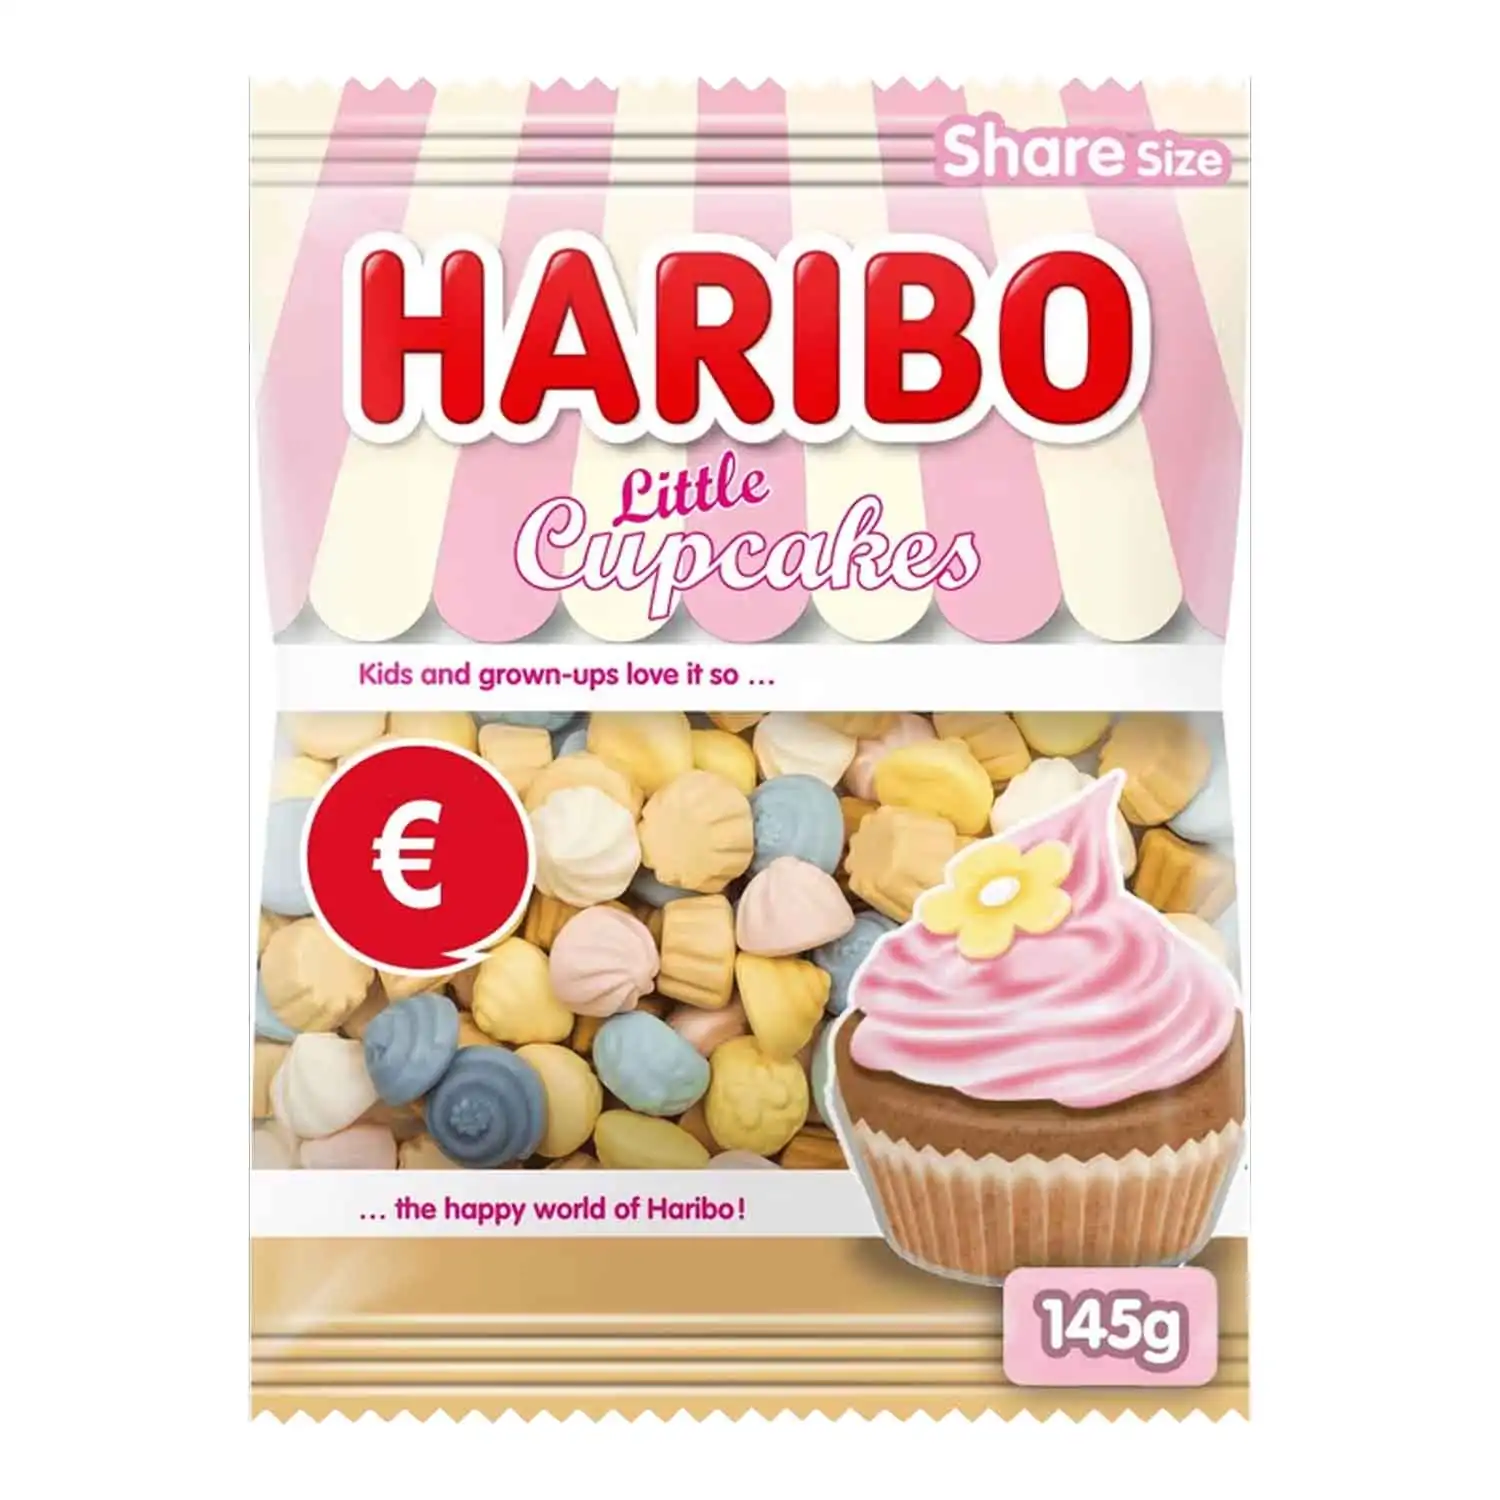 Haribo little cupcakes 145g - Buy at Real Tobacco